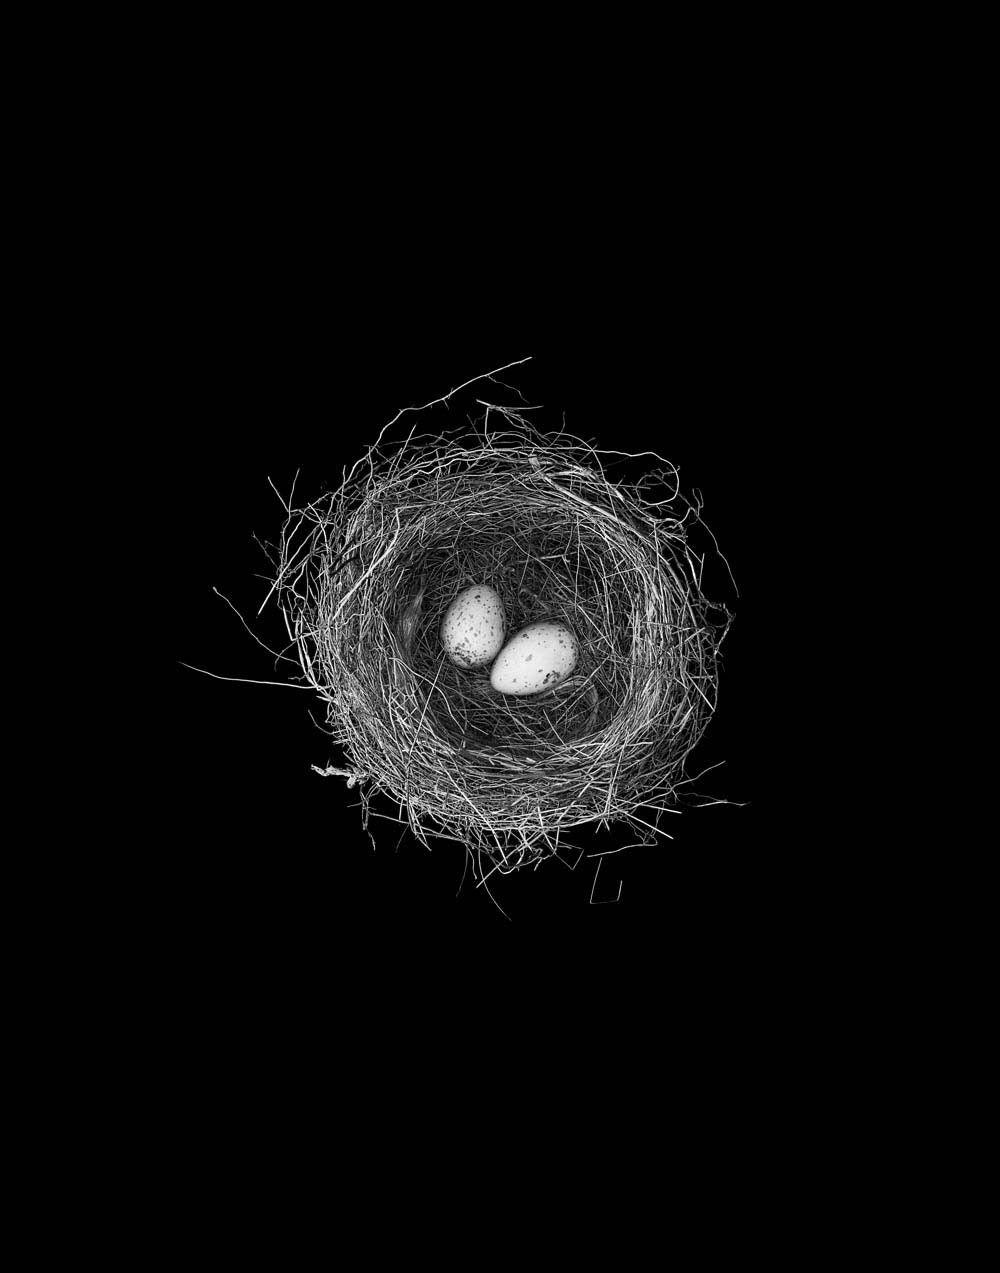 Birdsnest Black and White Logo - birds nest. nests, feathers. Birds, Nest, Black, white birds